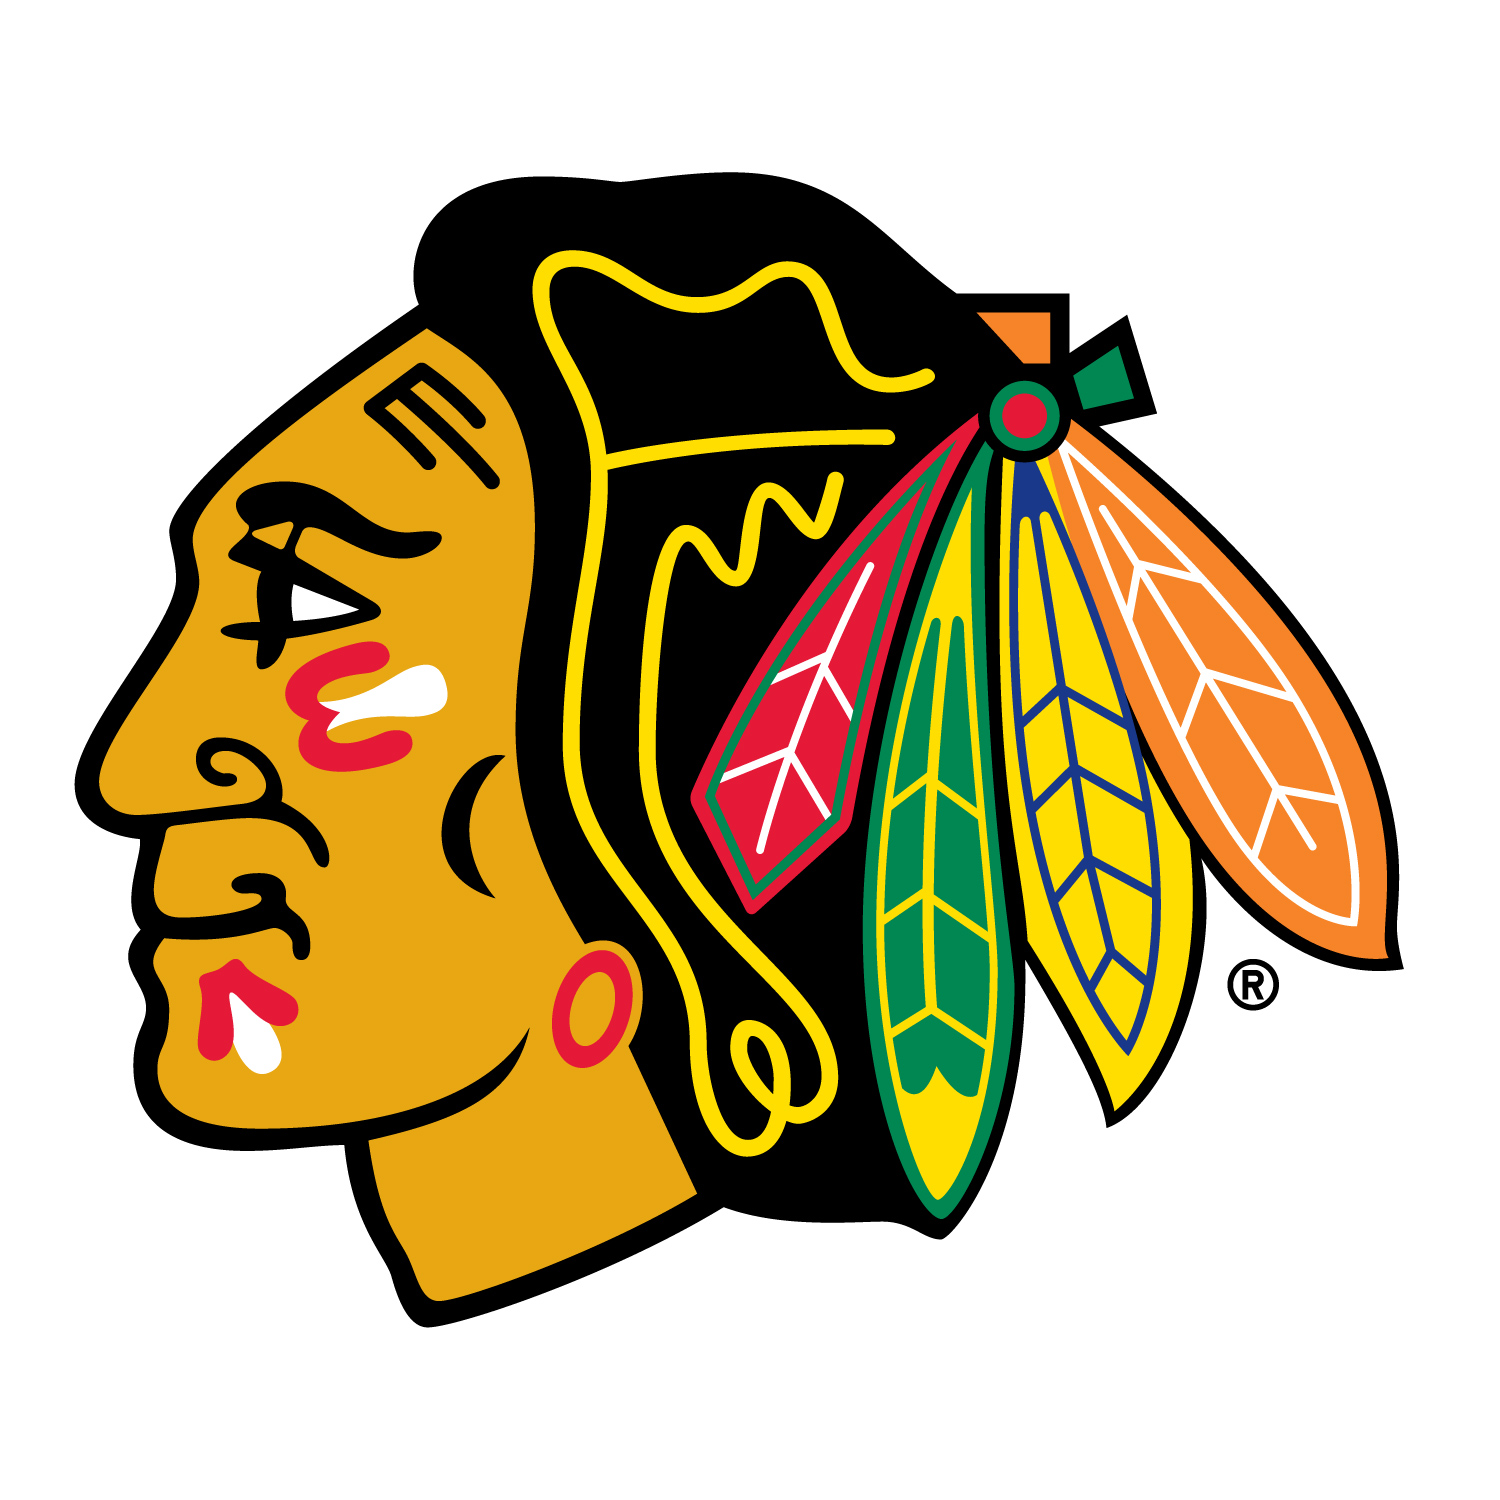 Blackhawks Logo